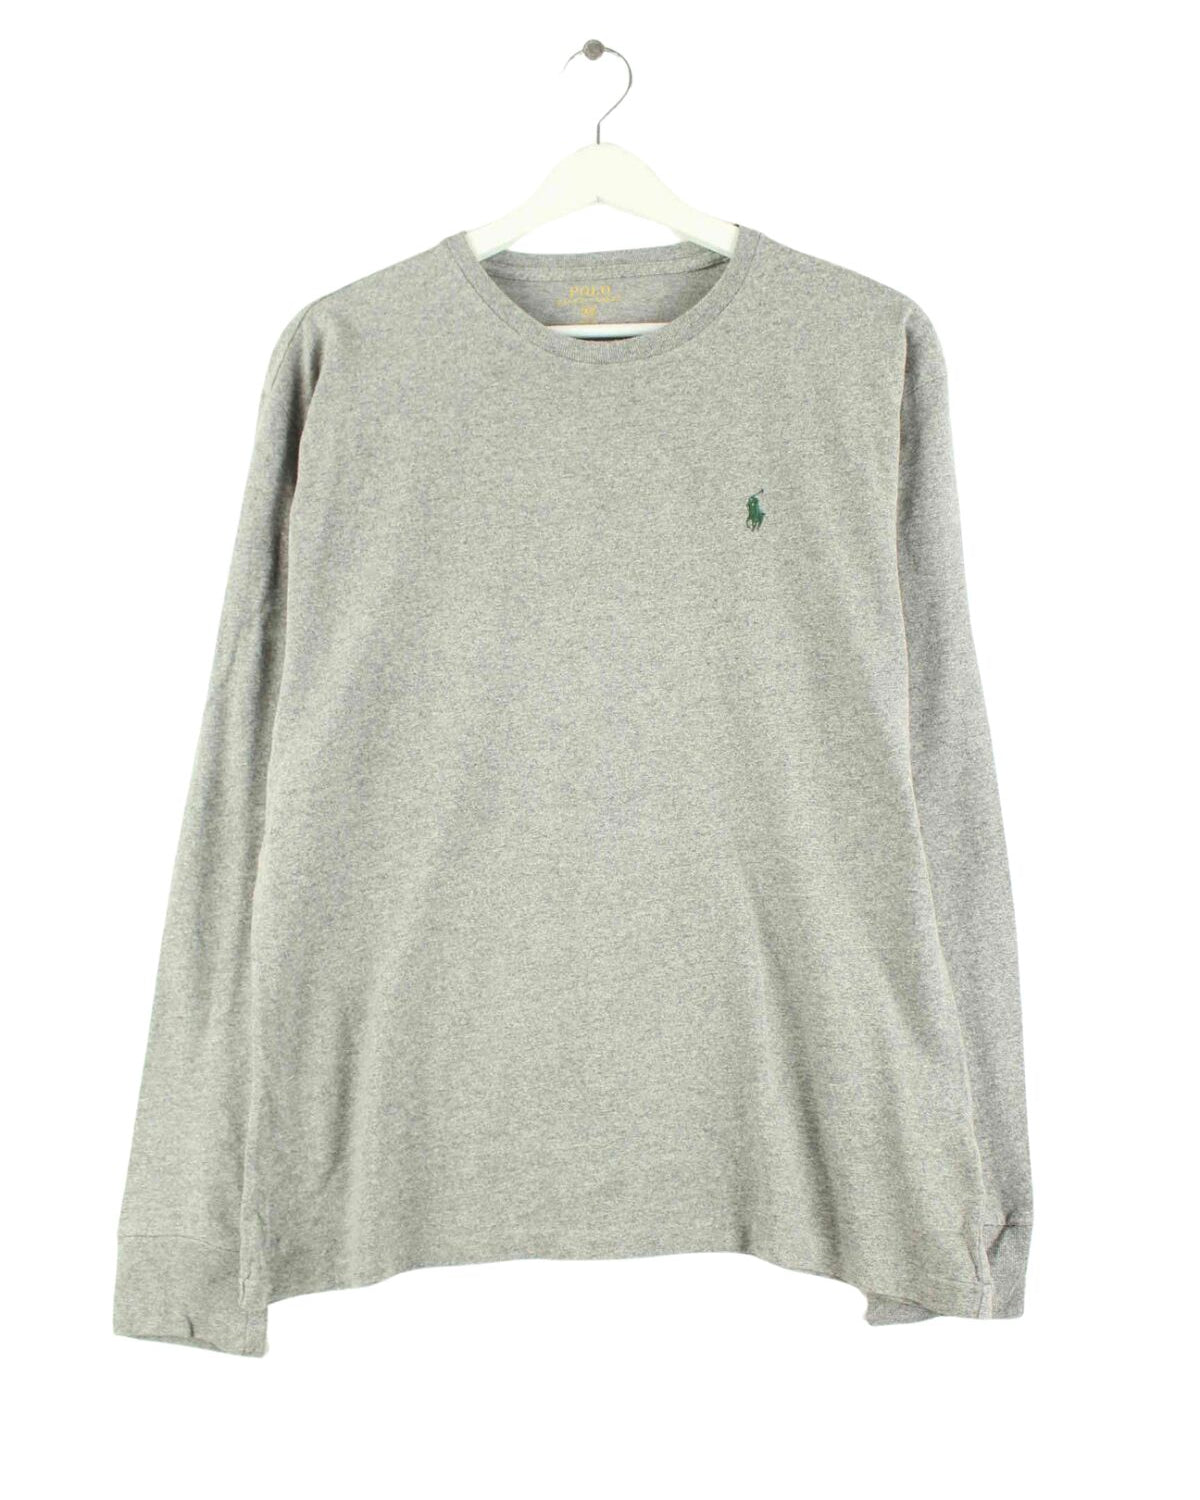 Ralph Lauren Basic Sweatshirt Grau XS (front image)